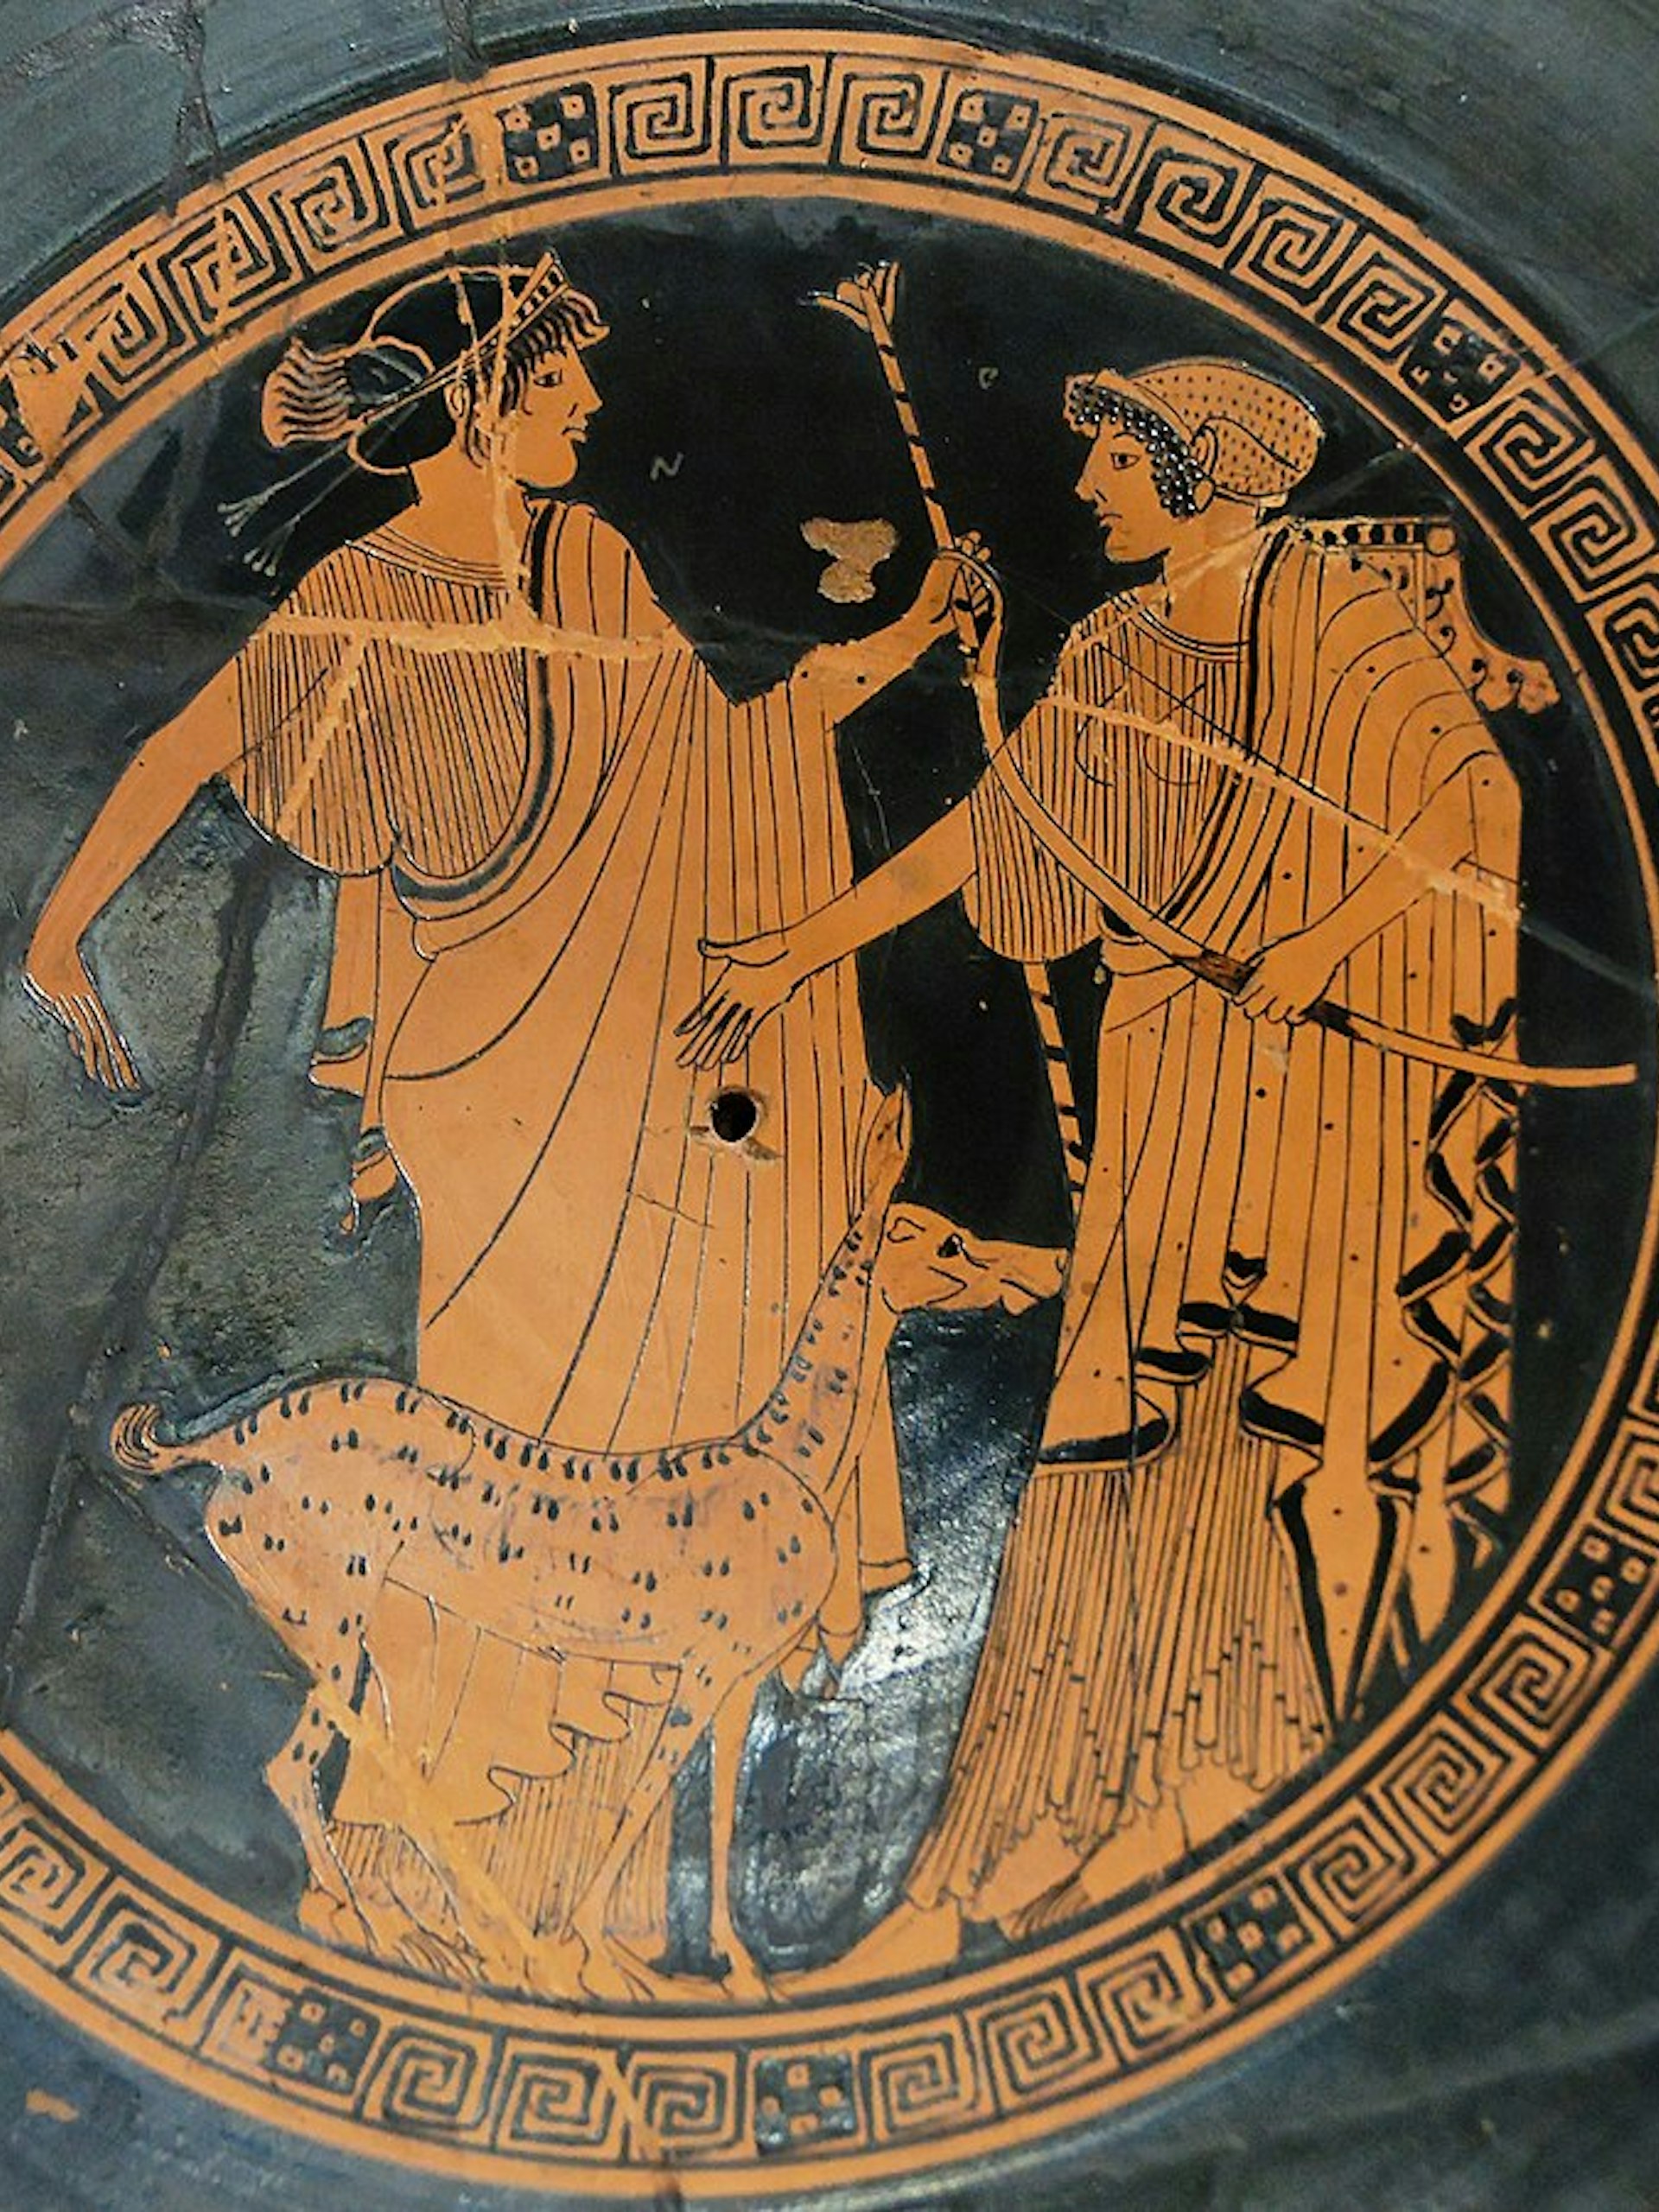 Vase painting of Apollo and Artemis